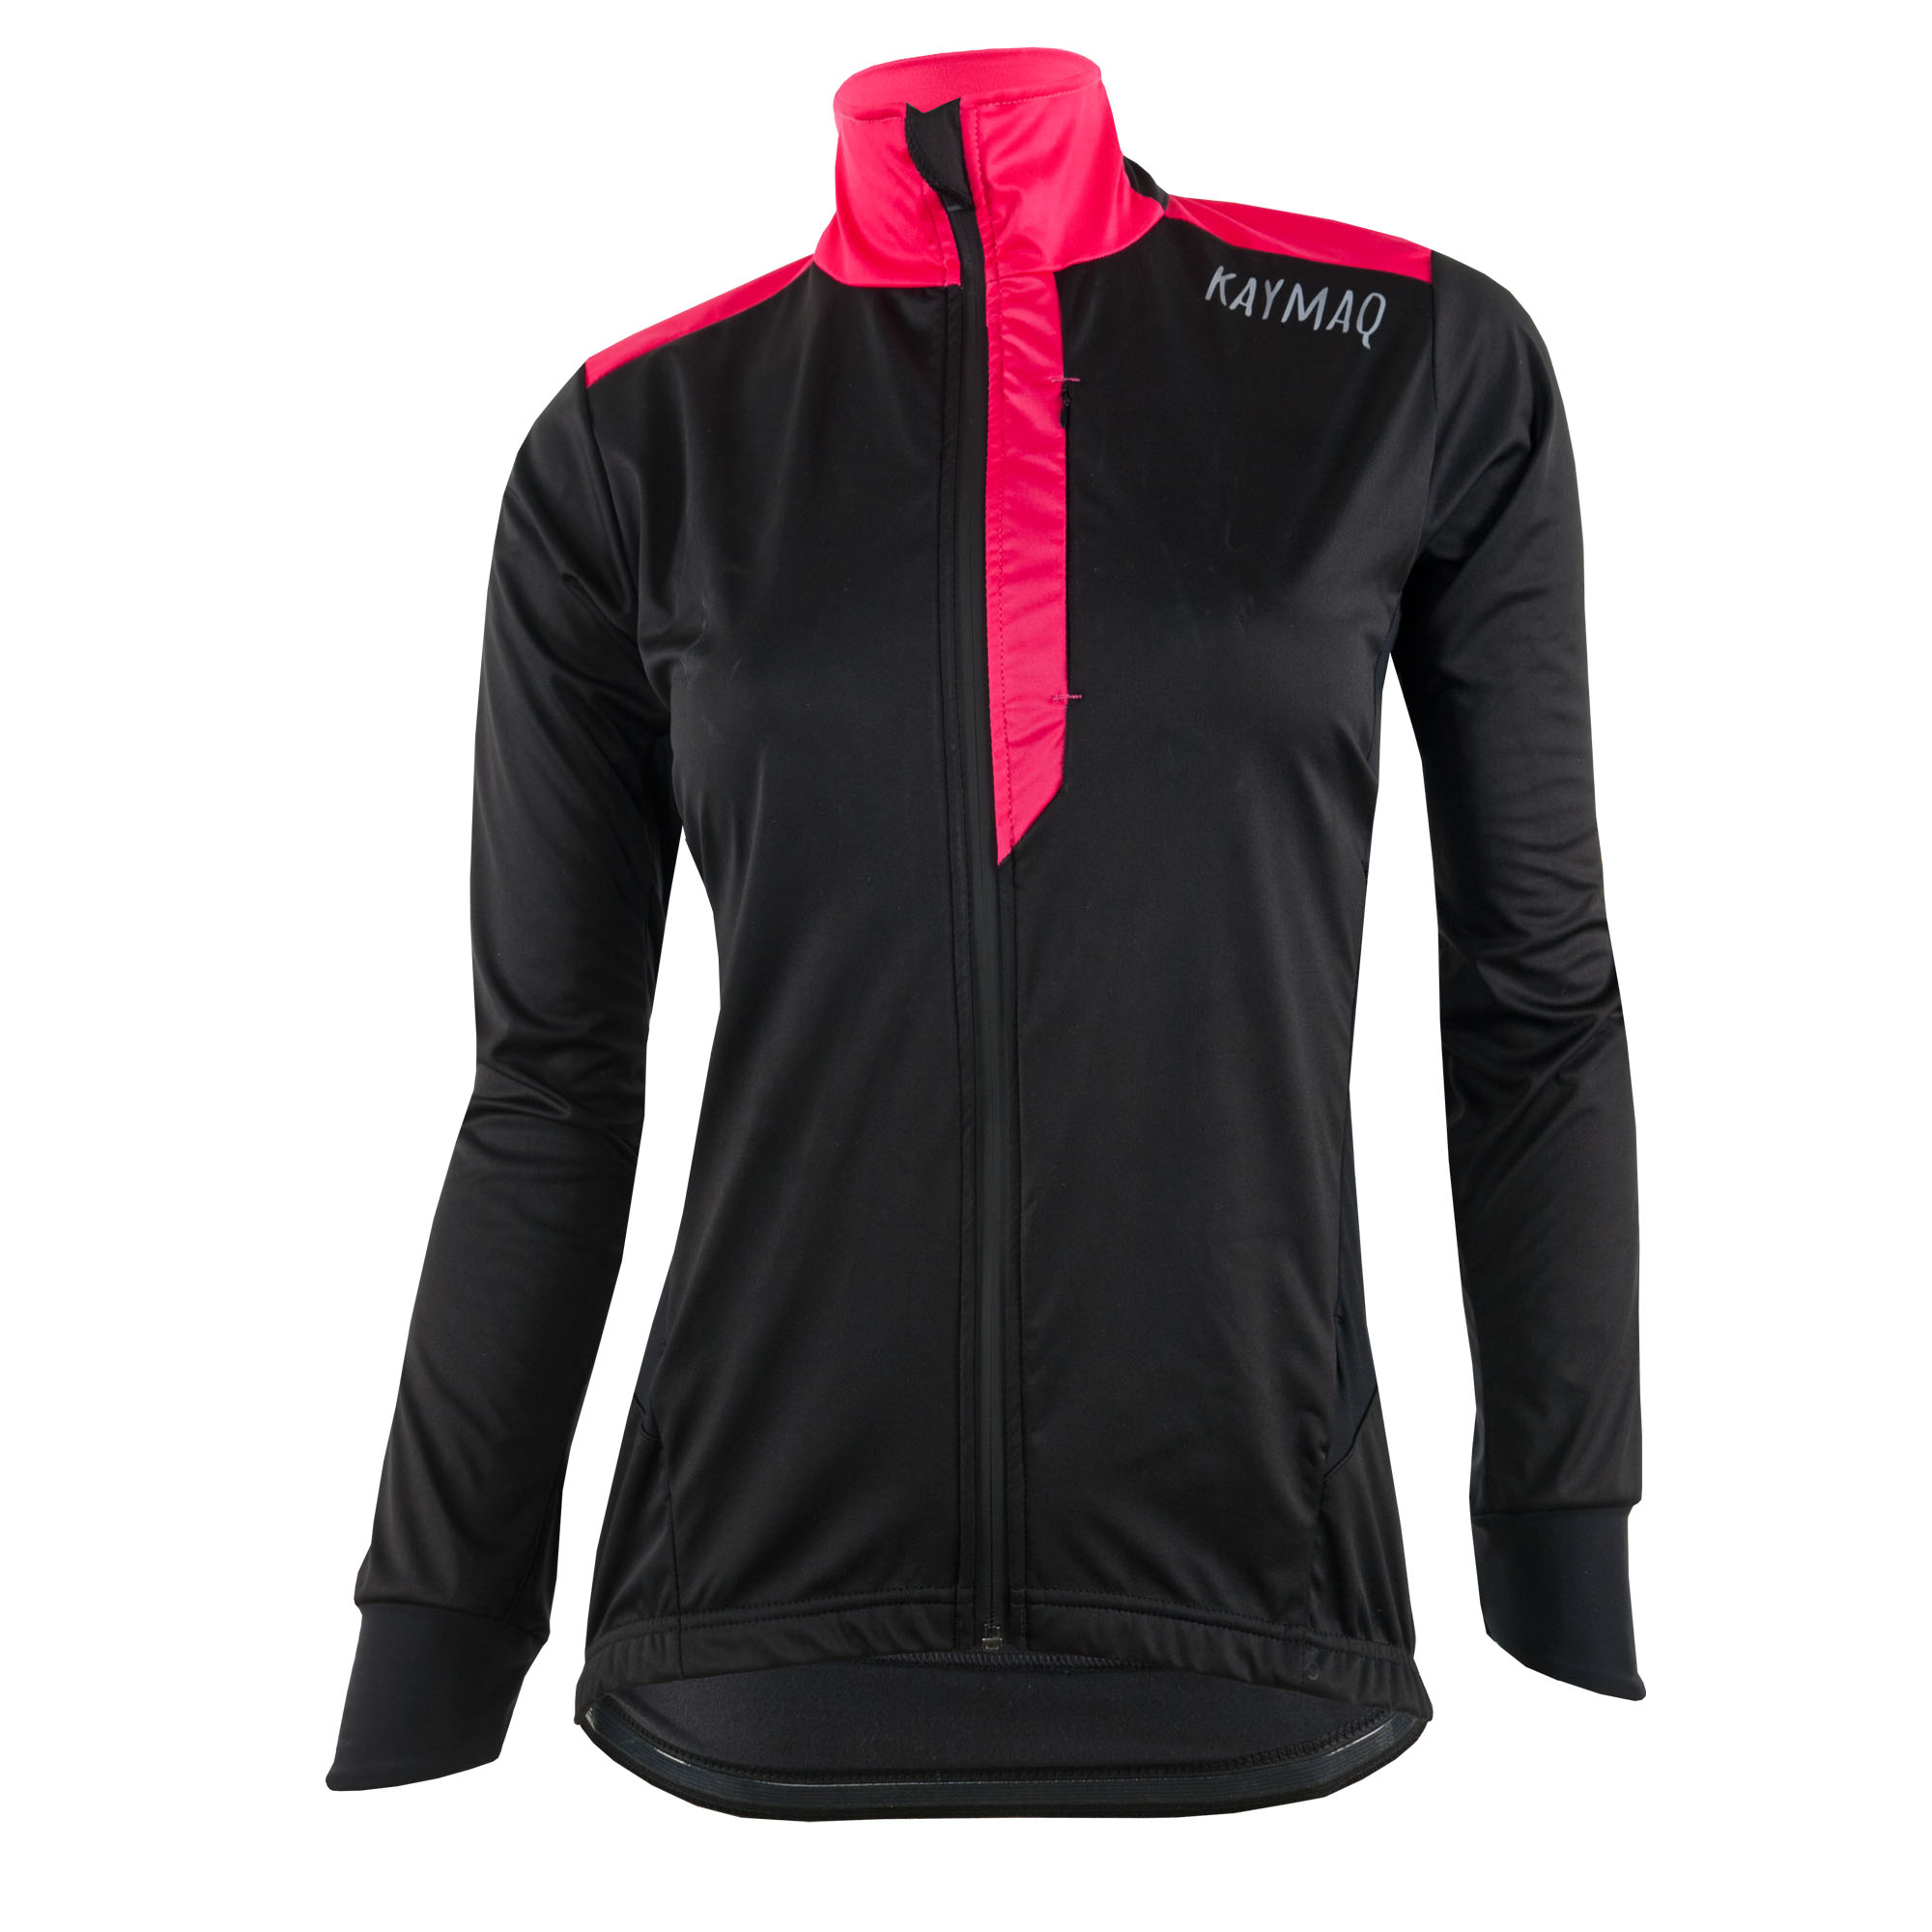 KAYMAQ JWSW-100 women's winter softshell cycling jacket